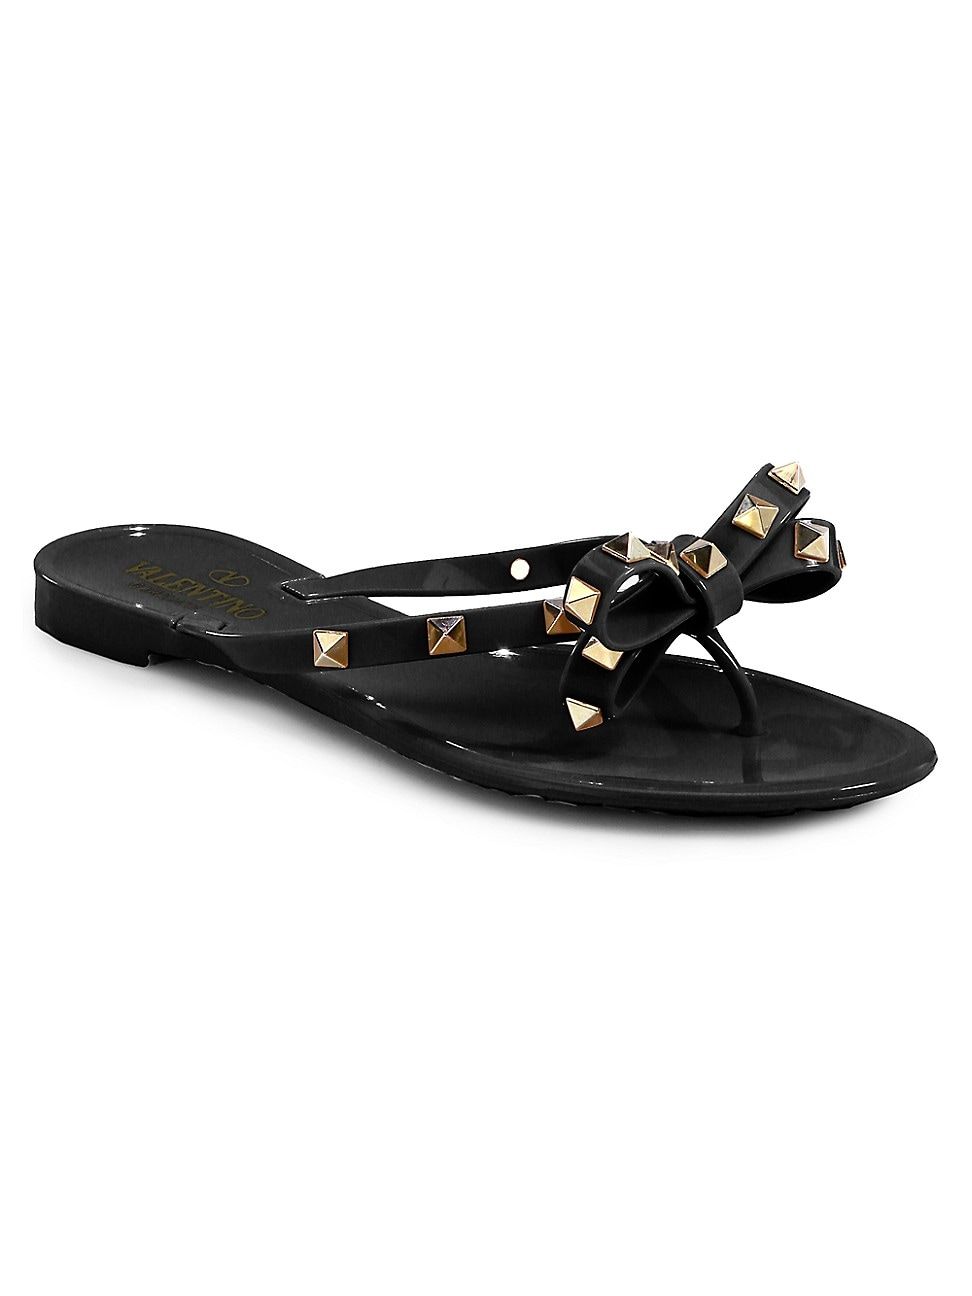 Valentino Women's Valentino Garavani Rockstud Bow Jelly Thong Sandals - Black - Size 7 | Saks Fifth Avenue